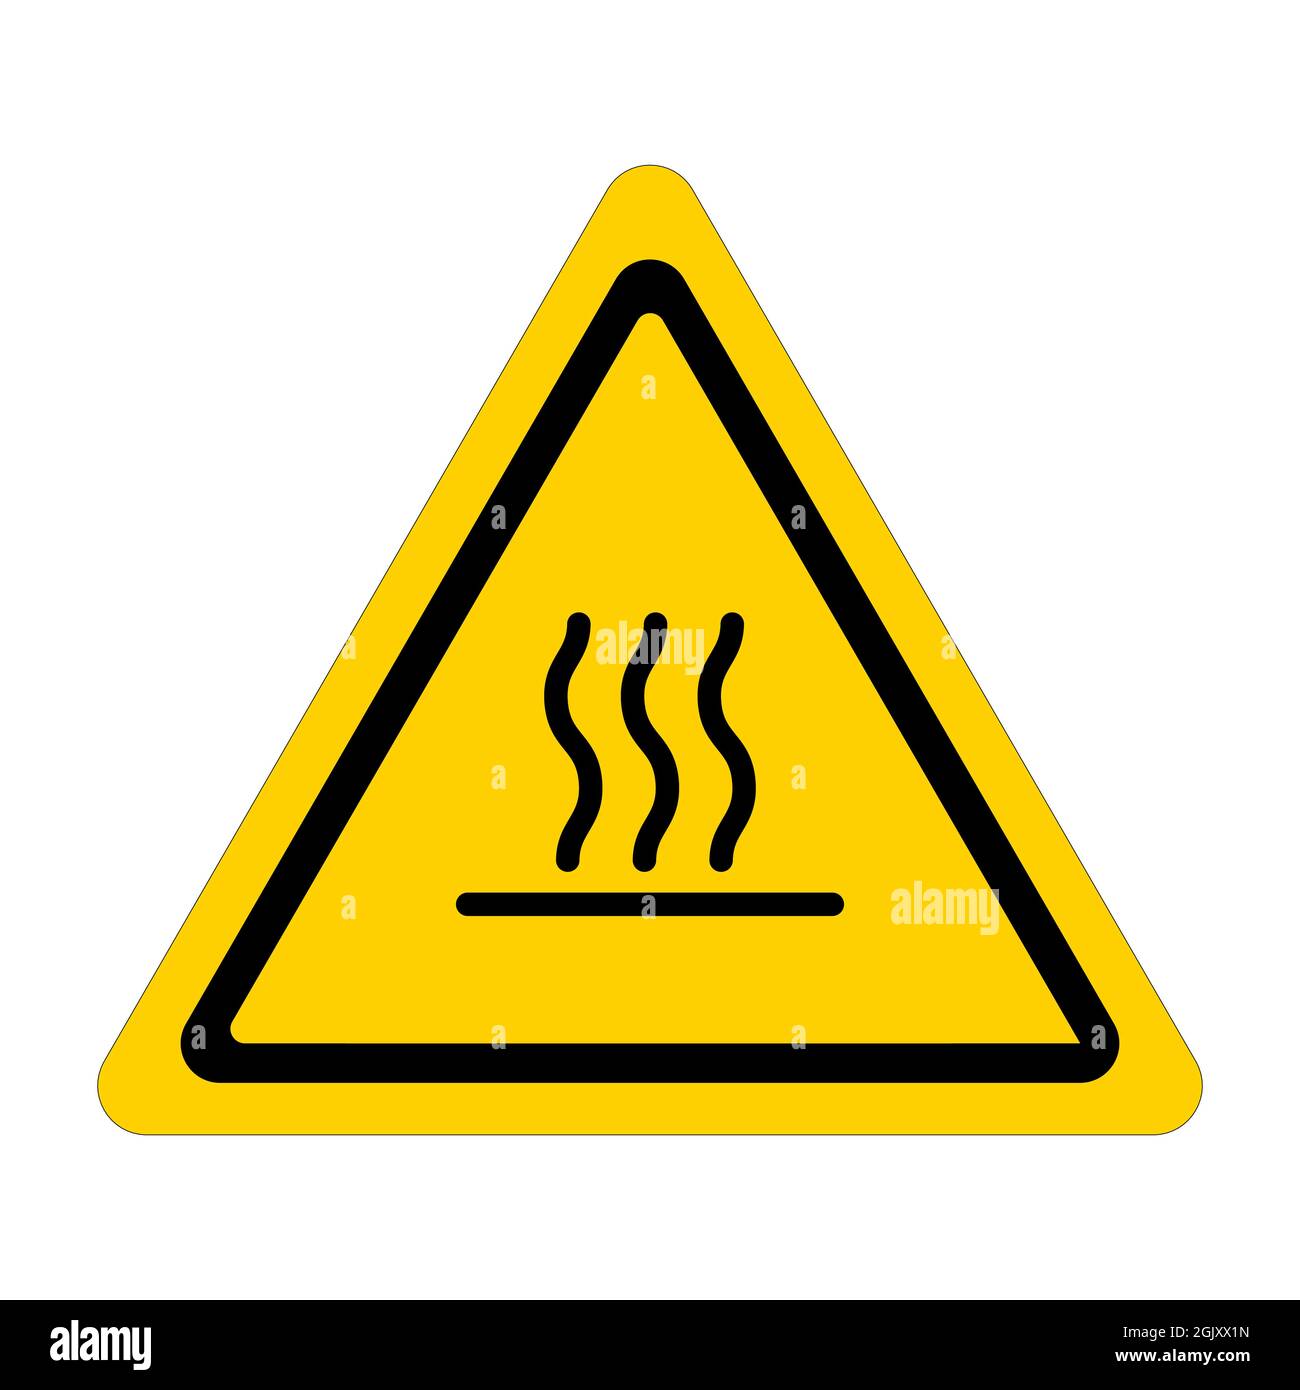 triangular sign danger hot surfaces inside avoid contact burn Stock Vector